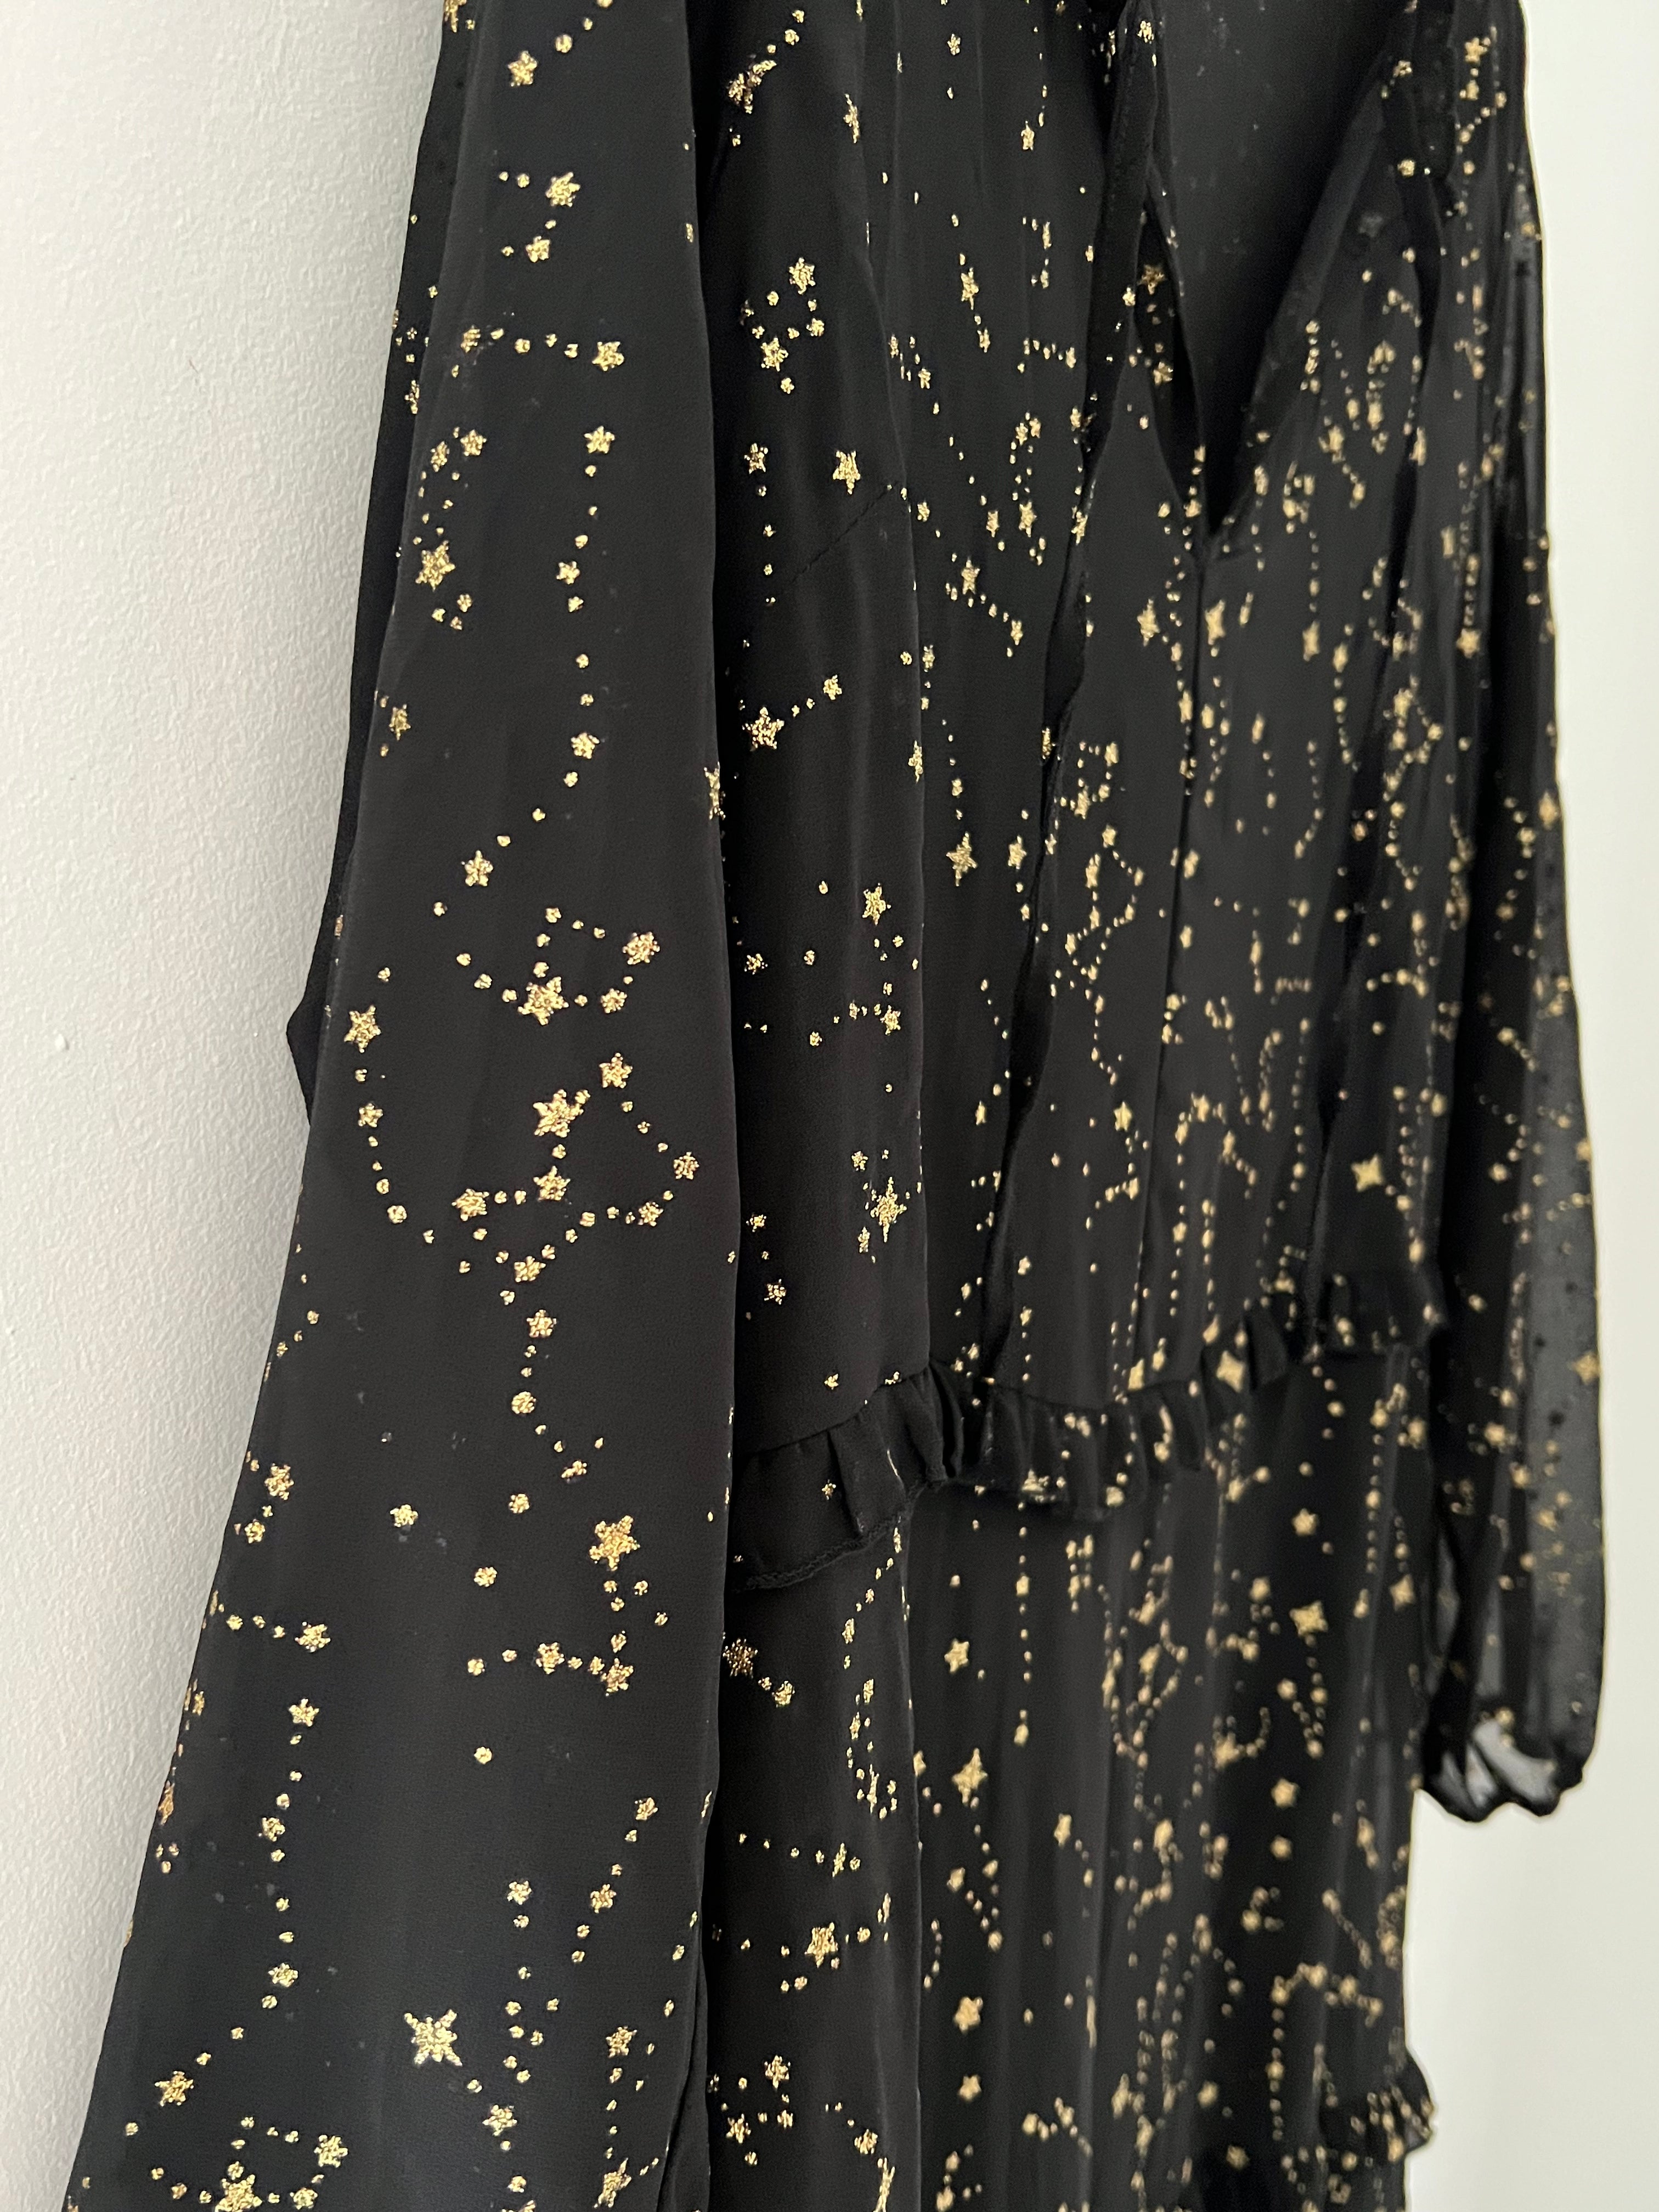 Constellation Dress in Black & Gold